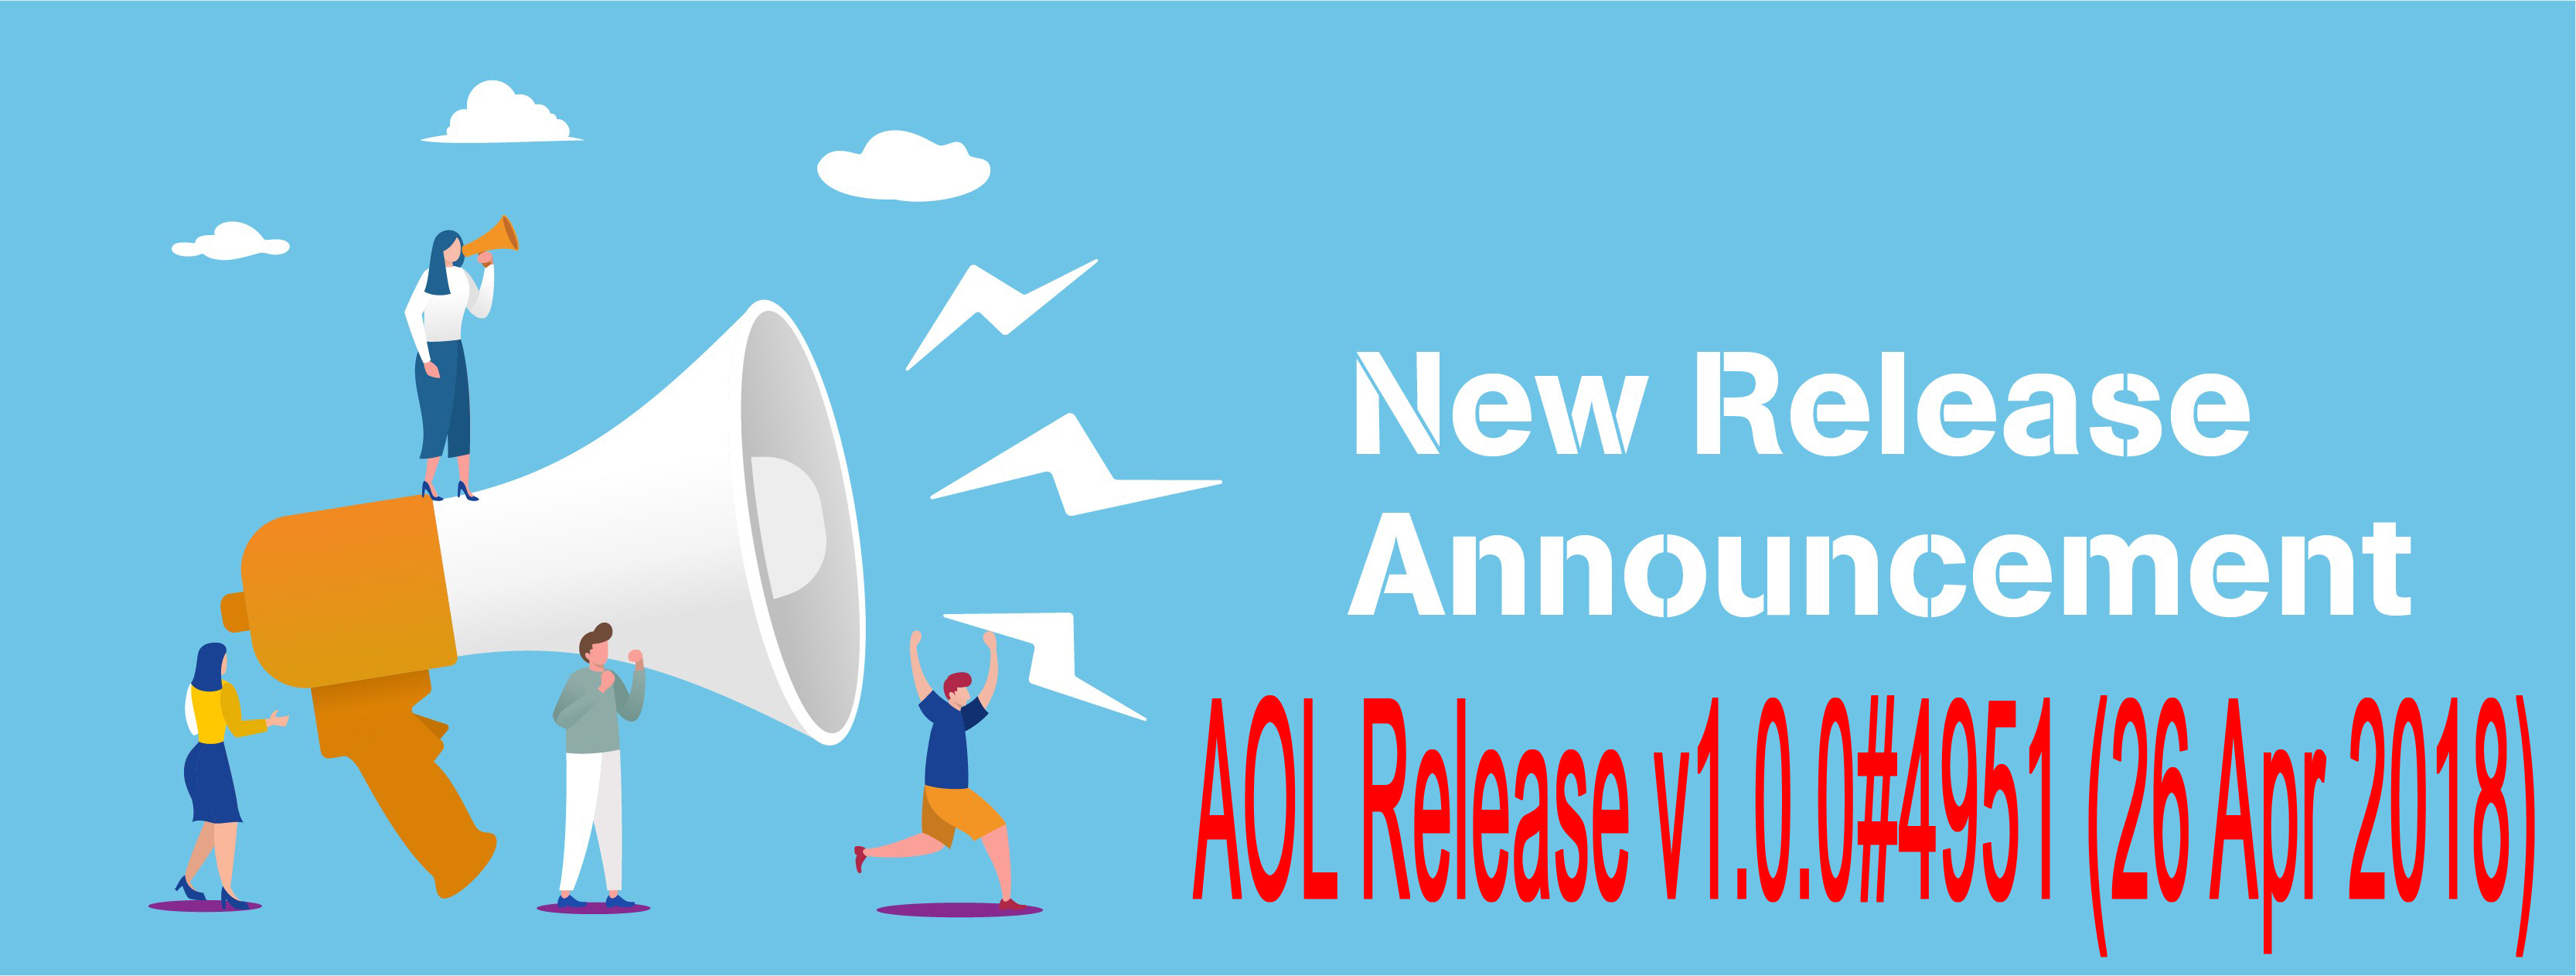 Release v1.0.0#4951 (26 Apr 2018)